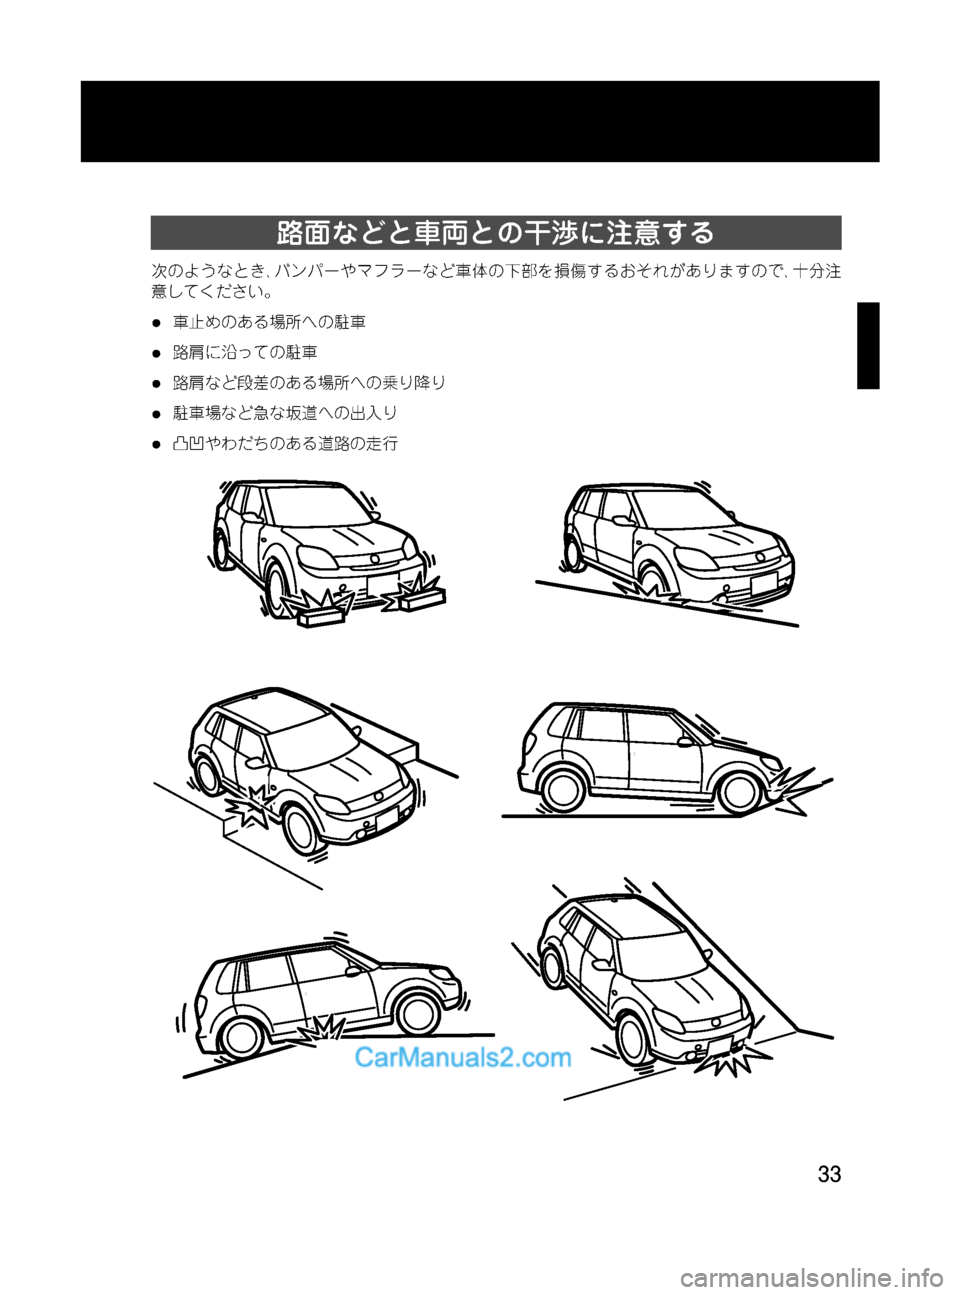 MAZDA MODEL VERISA 2007  ベリーサ｜取扱説明書 (in Japanese) Black plate (33,1)
路面などと車両との干渉に注意する
次のようなとき､バンパーやマフラーなど車体の下部を損傷するおそれがありますので､十分注
�